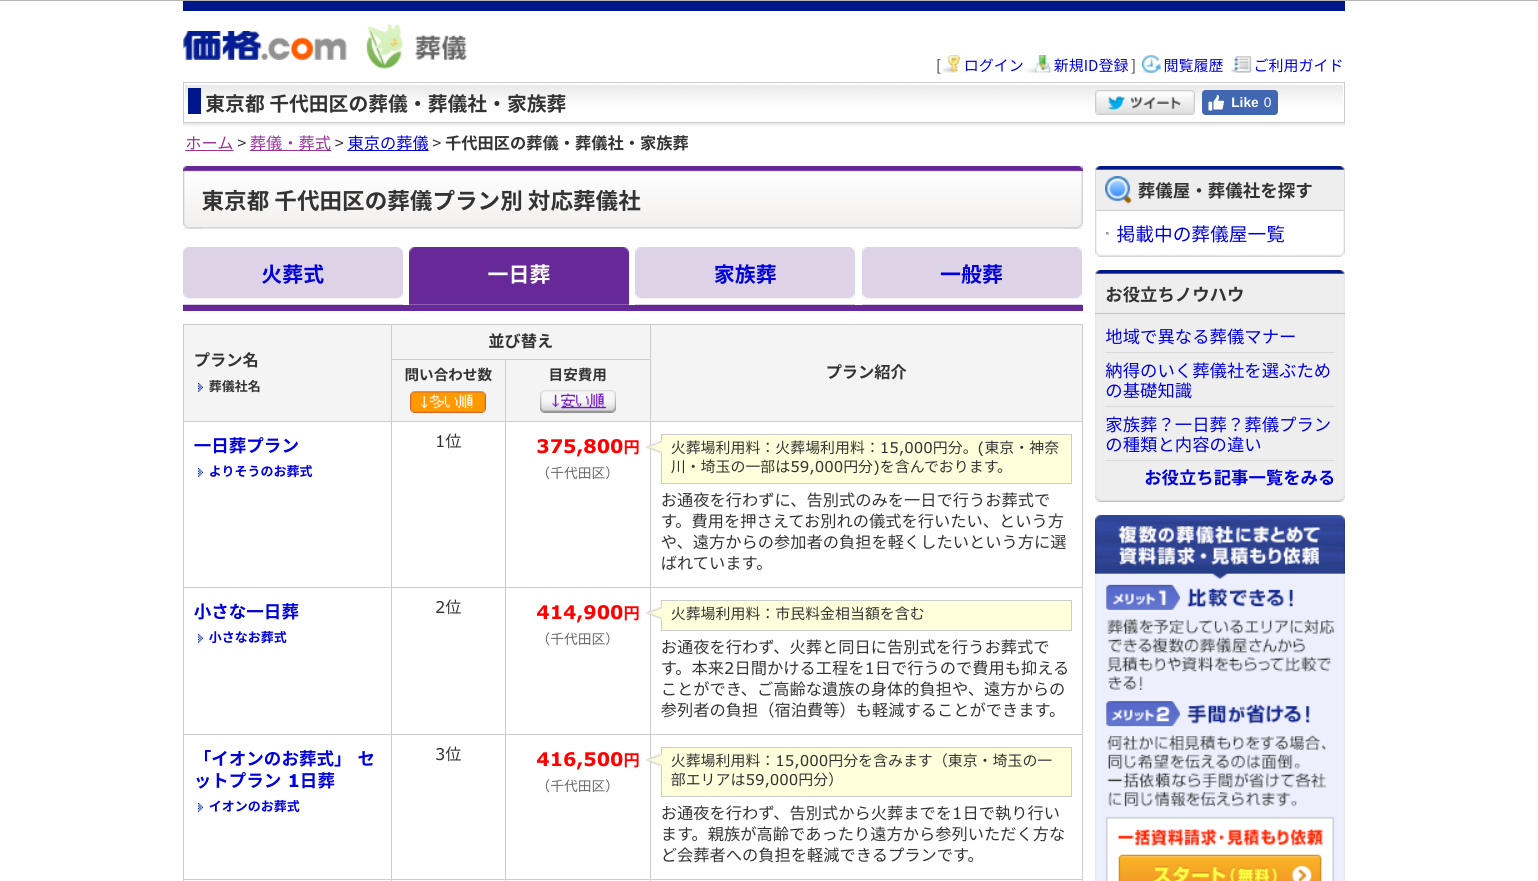 Death Care Industry _ Kakaku Search Results _ price comparison site